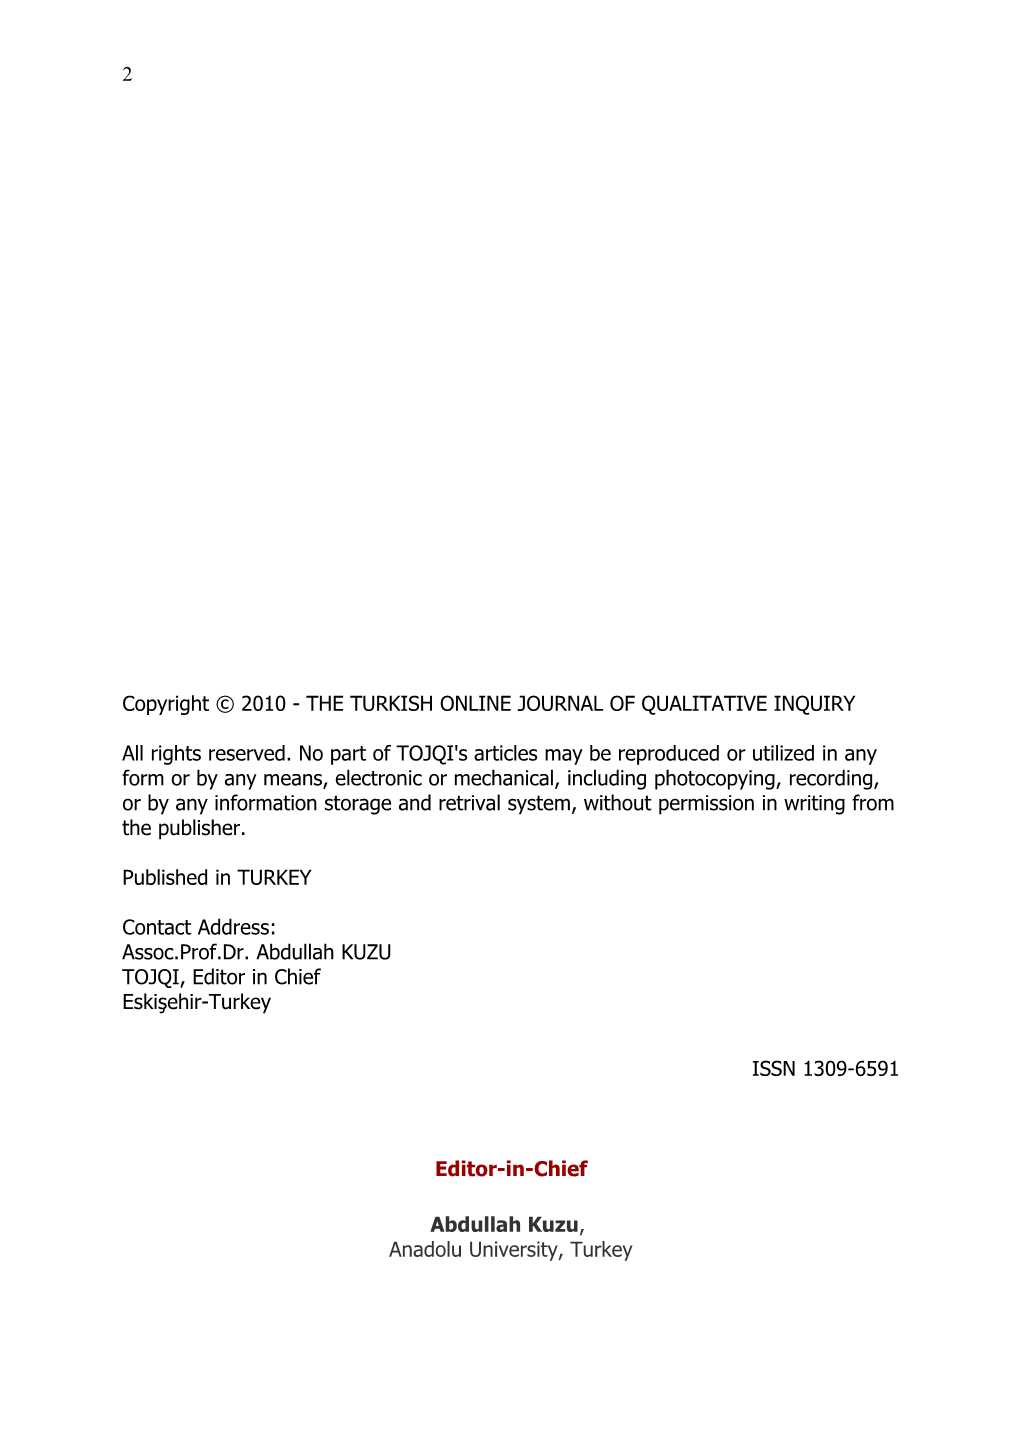 Turkish Online Journal of Qualitative Inquiry, October 2010, 1(2)